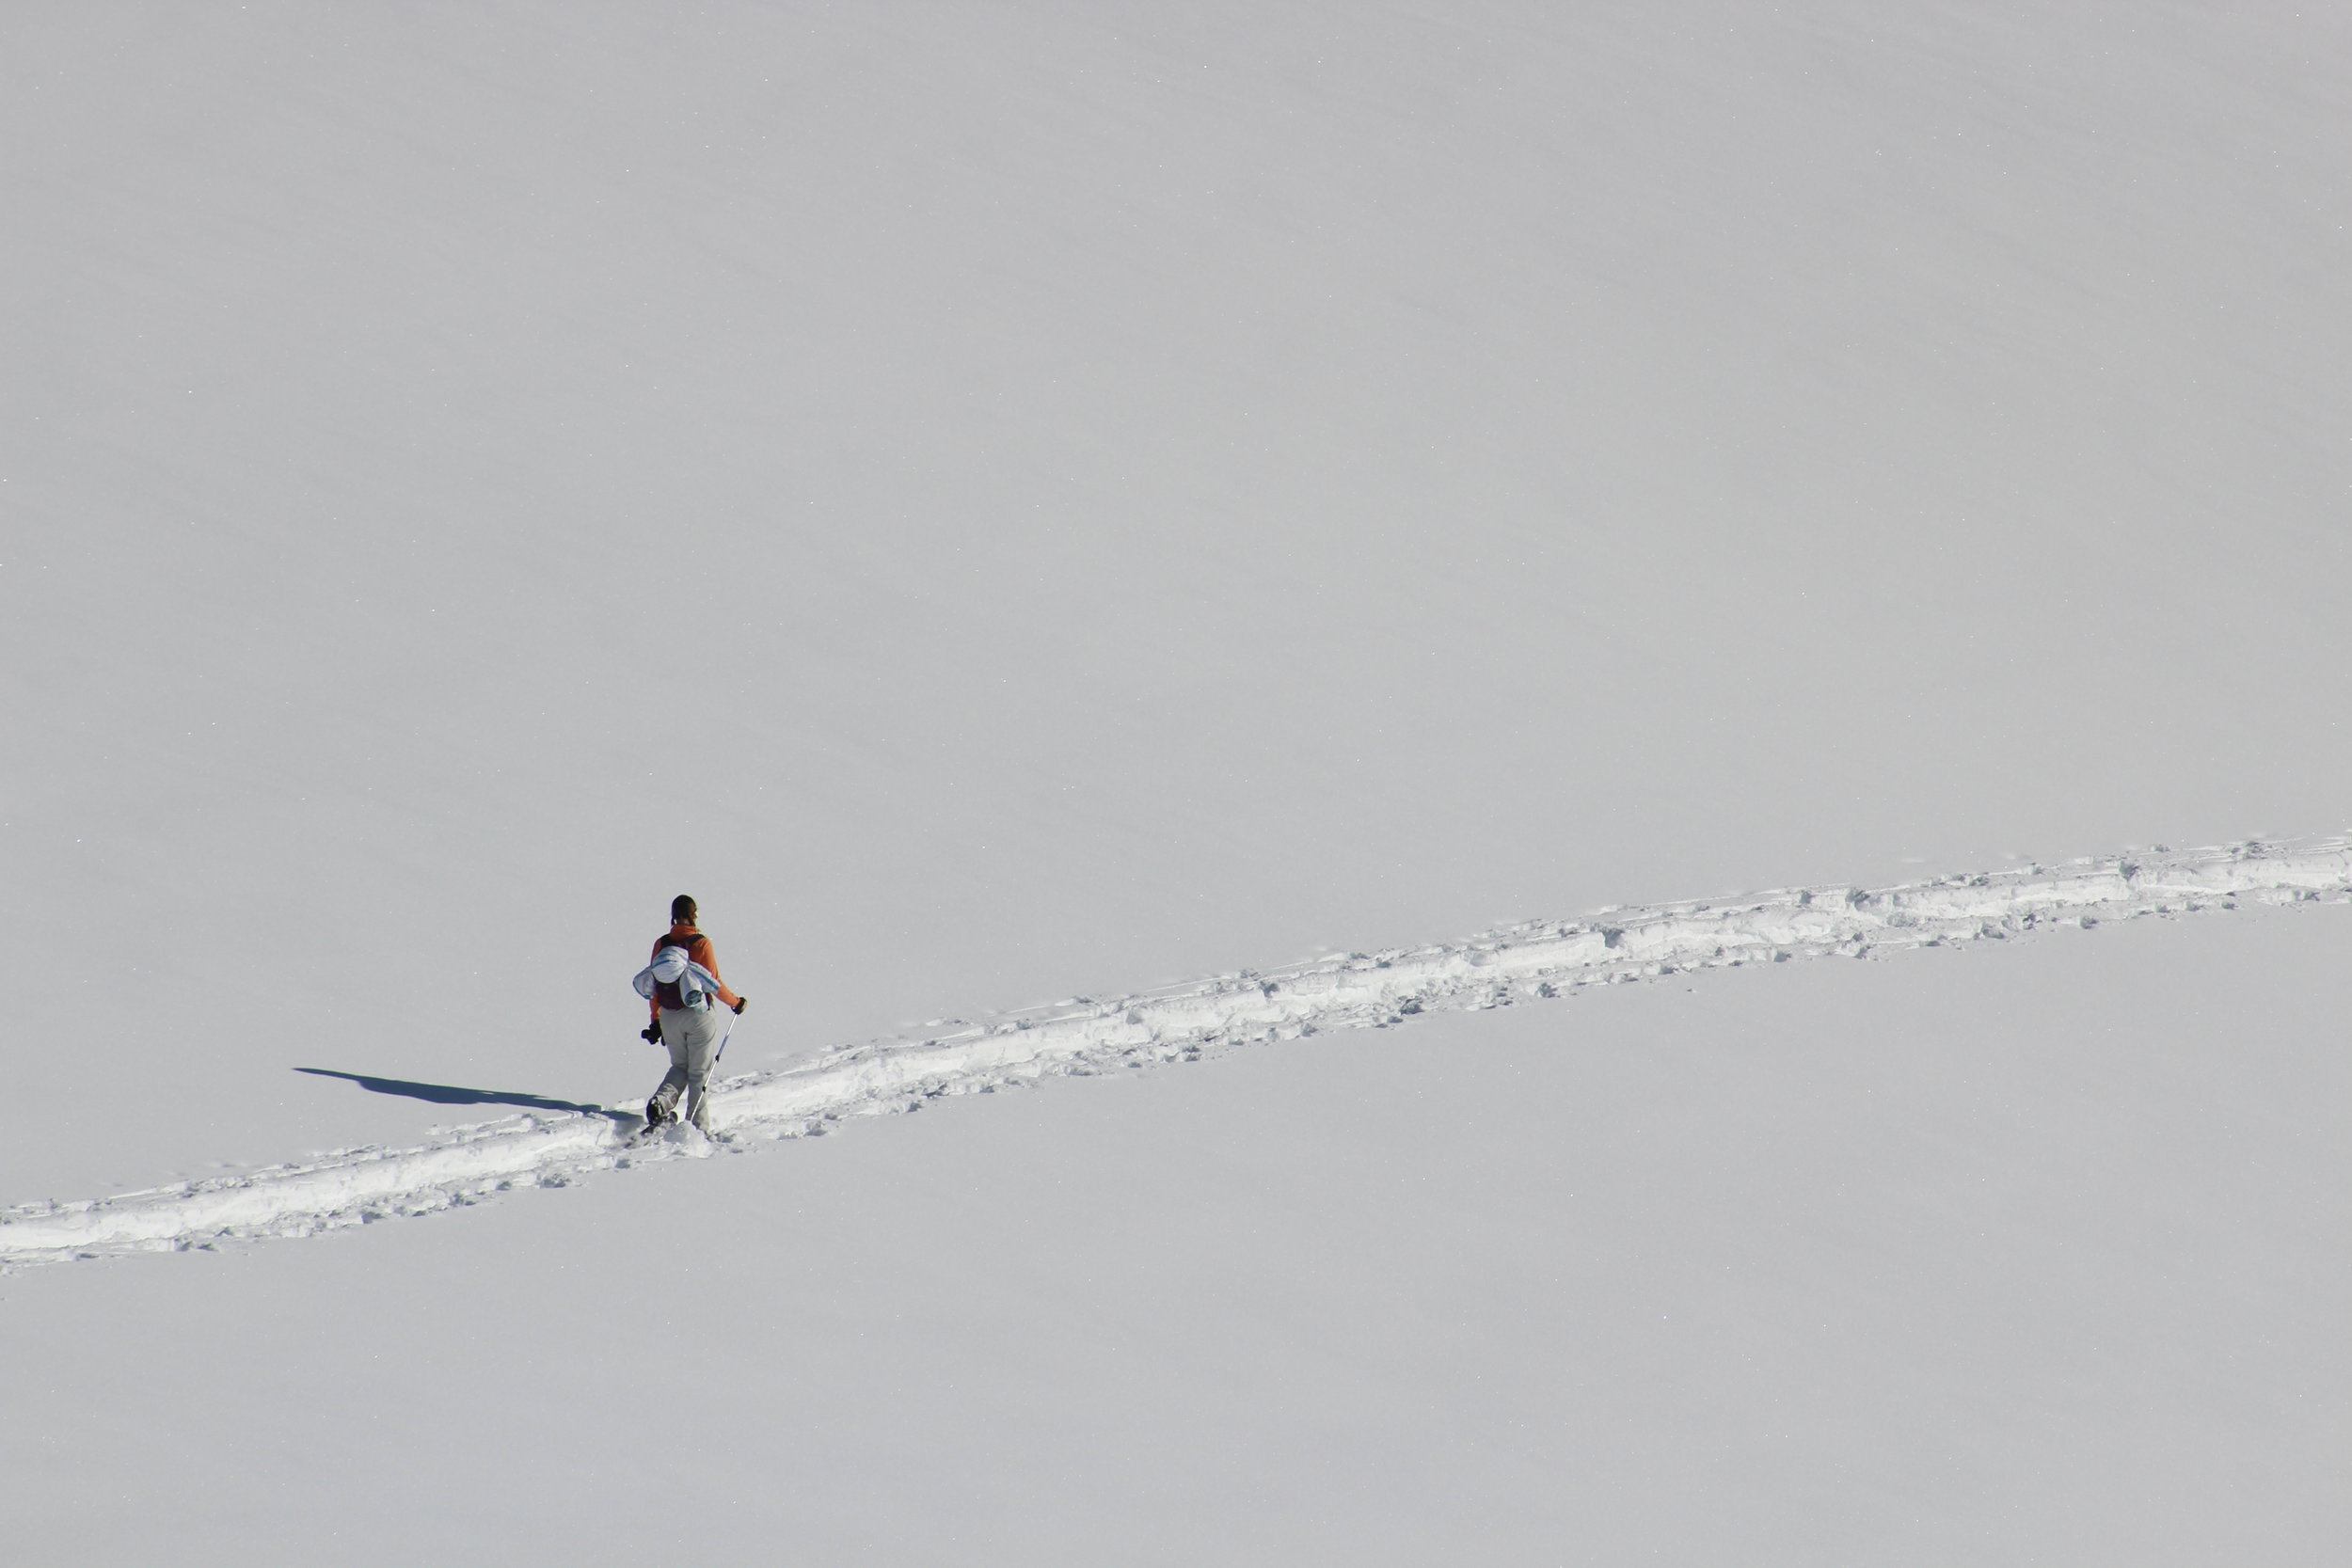 Tory crosses a snow field